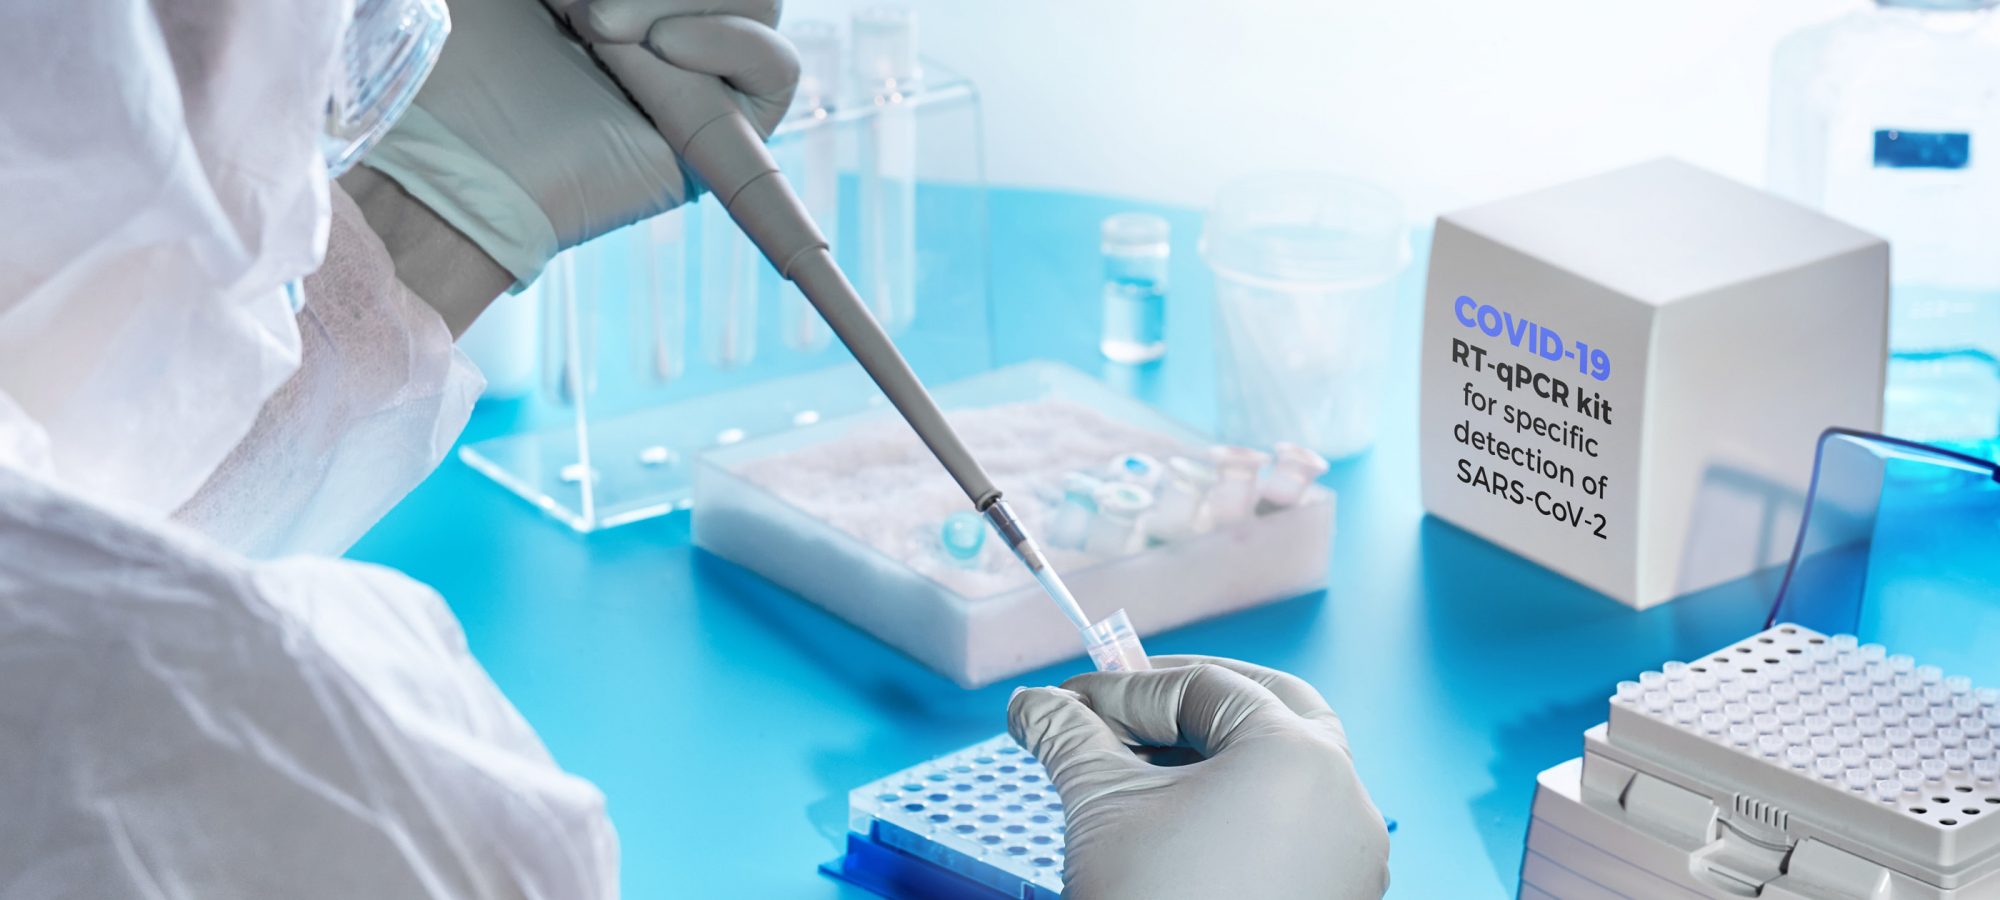 WHO (finally) admits PCR tests create false positives